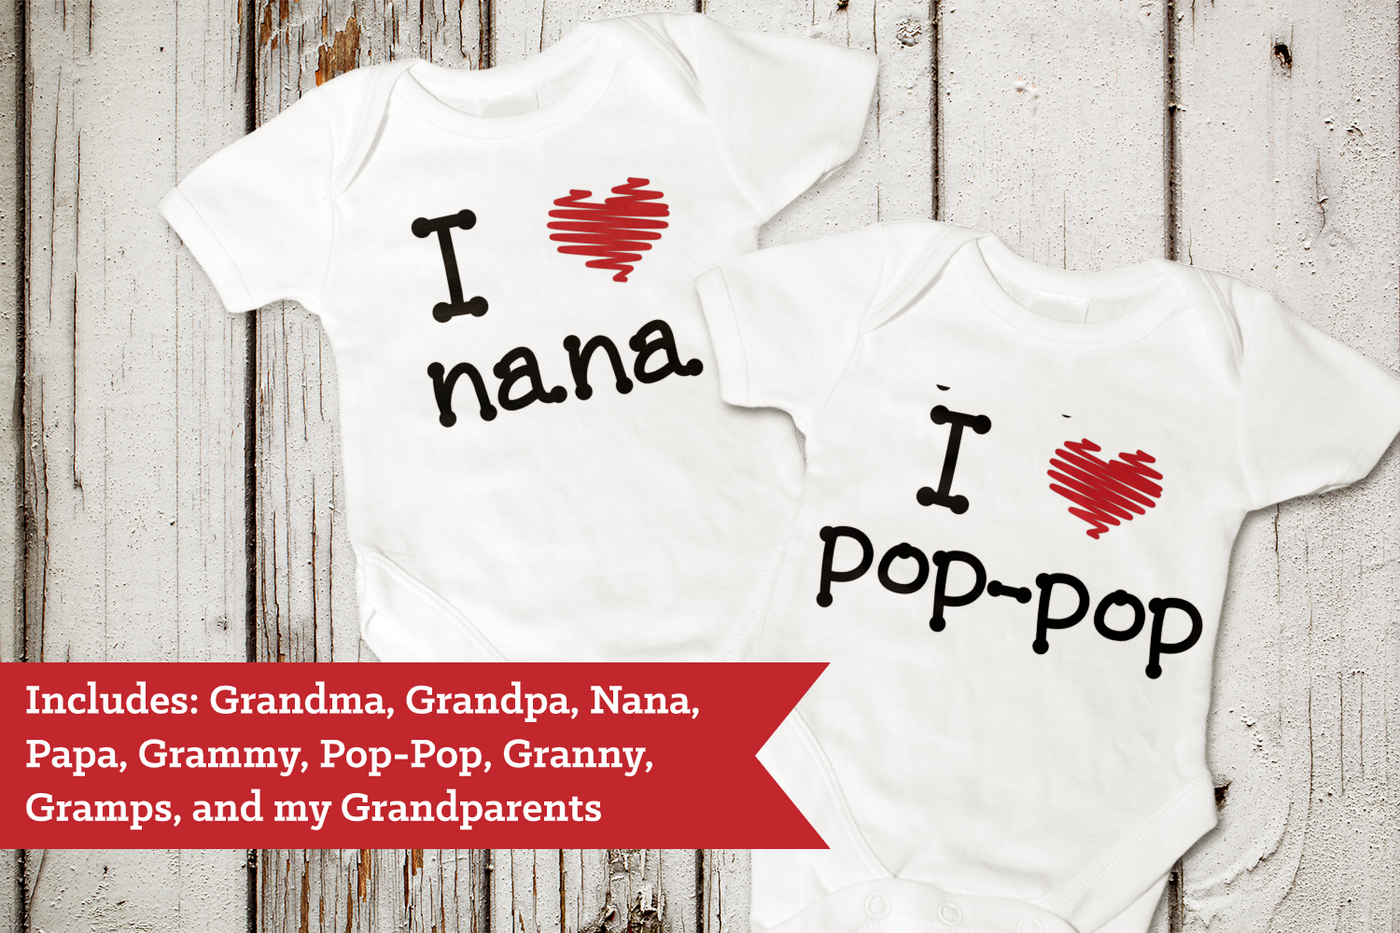  I heart grandparents set includes Grandma, Grandpa, Nana, Papa, Grammy, Pop-Pop, Granny, Gramps, and my Grandparents.